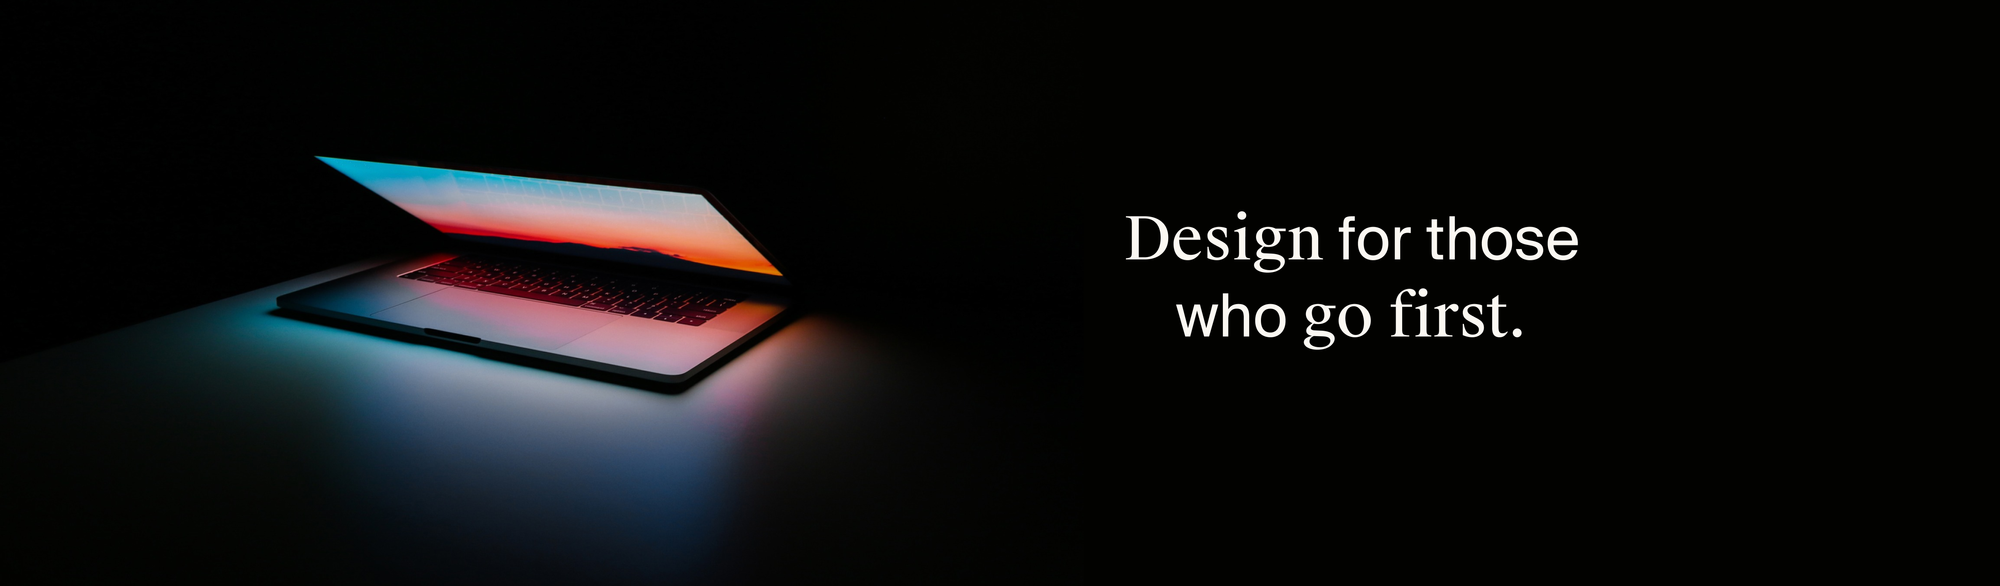 Tyler Beaty  |  Full-stack designer specializing in brand & product.